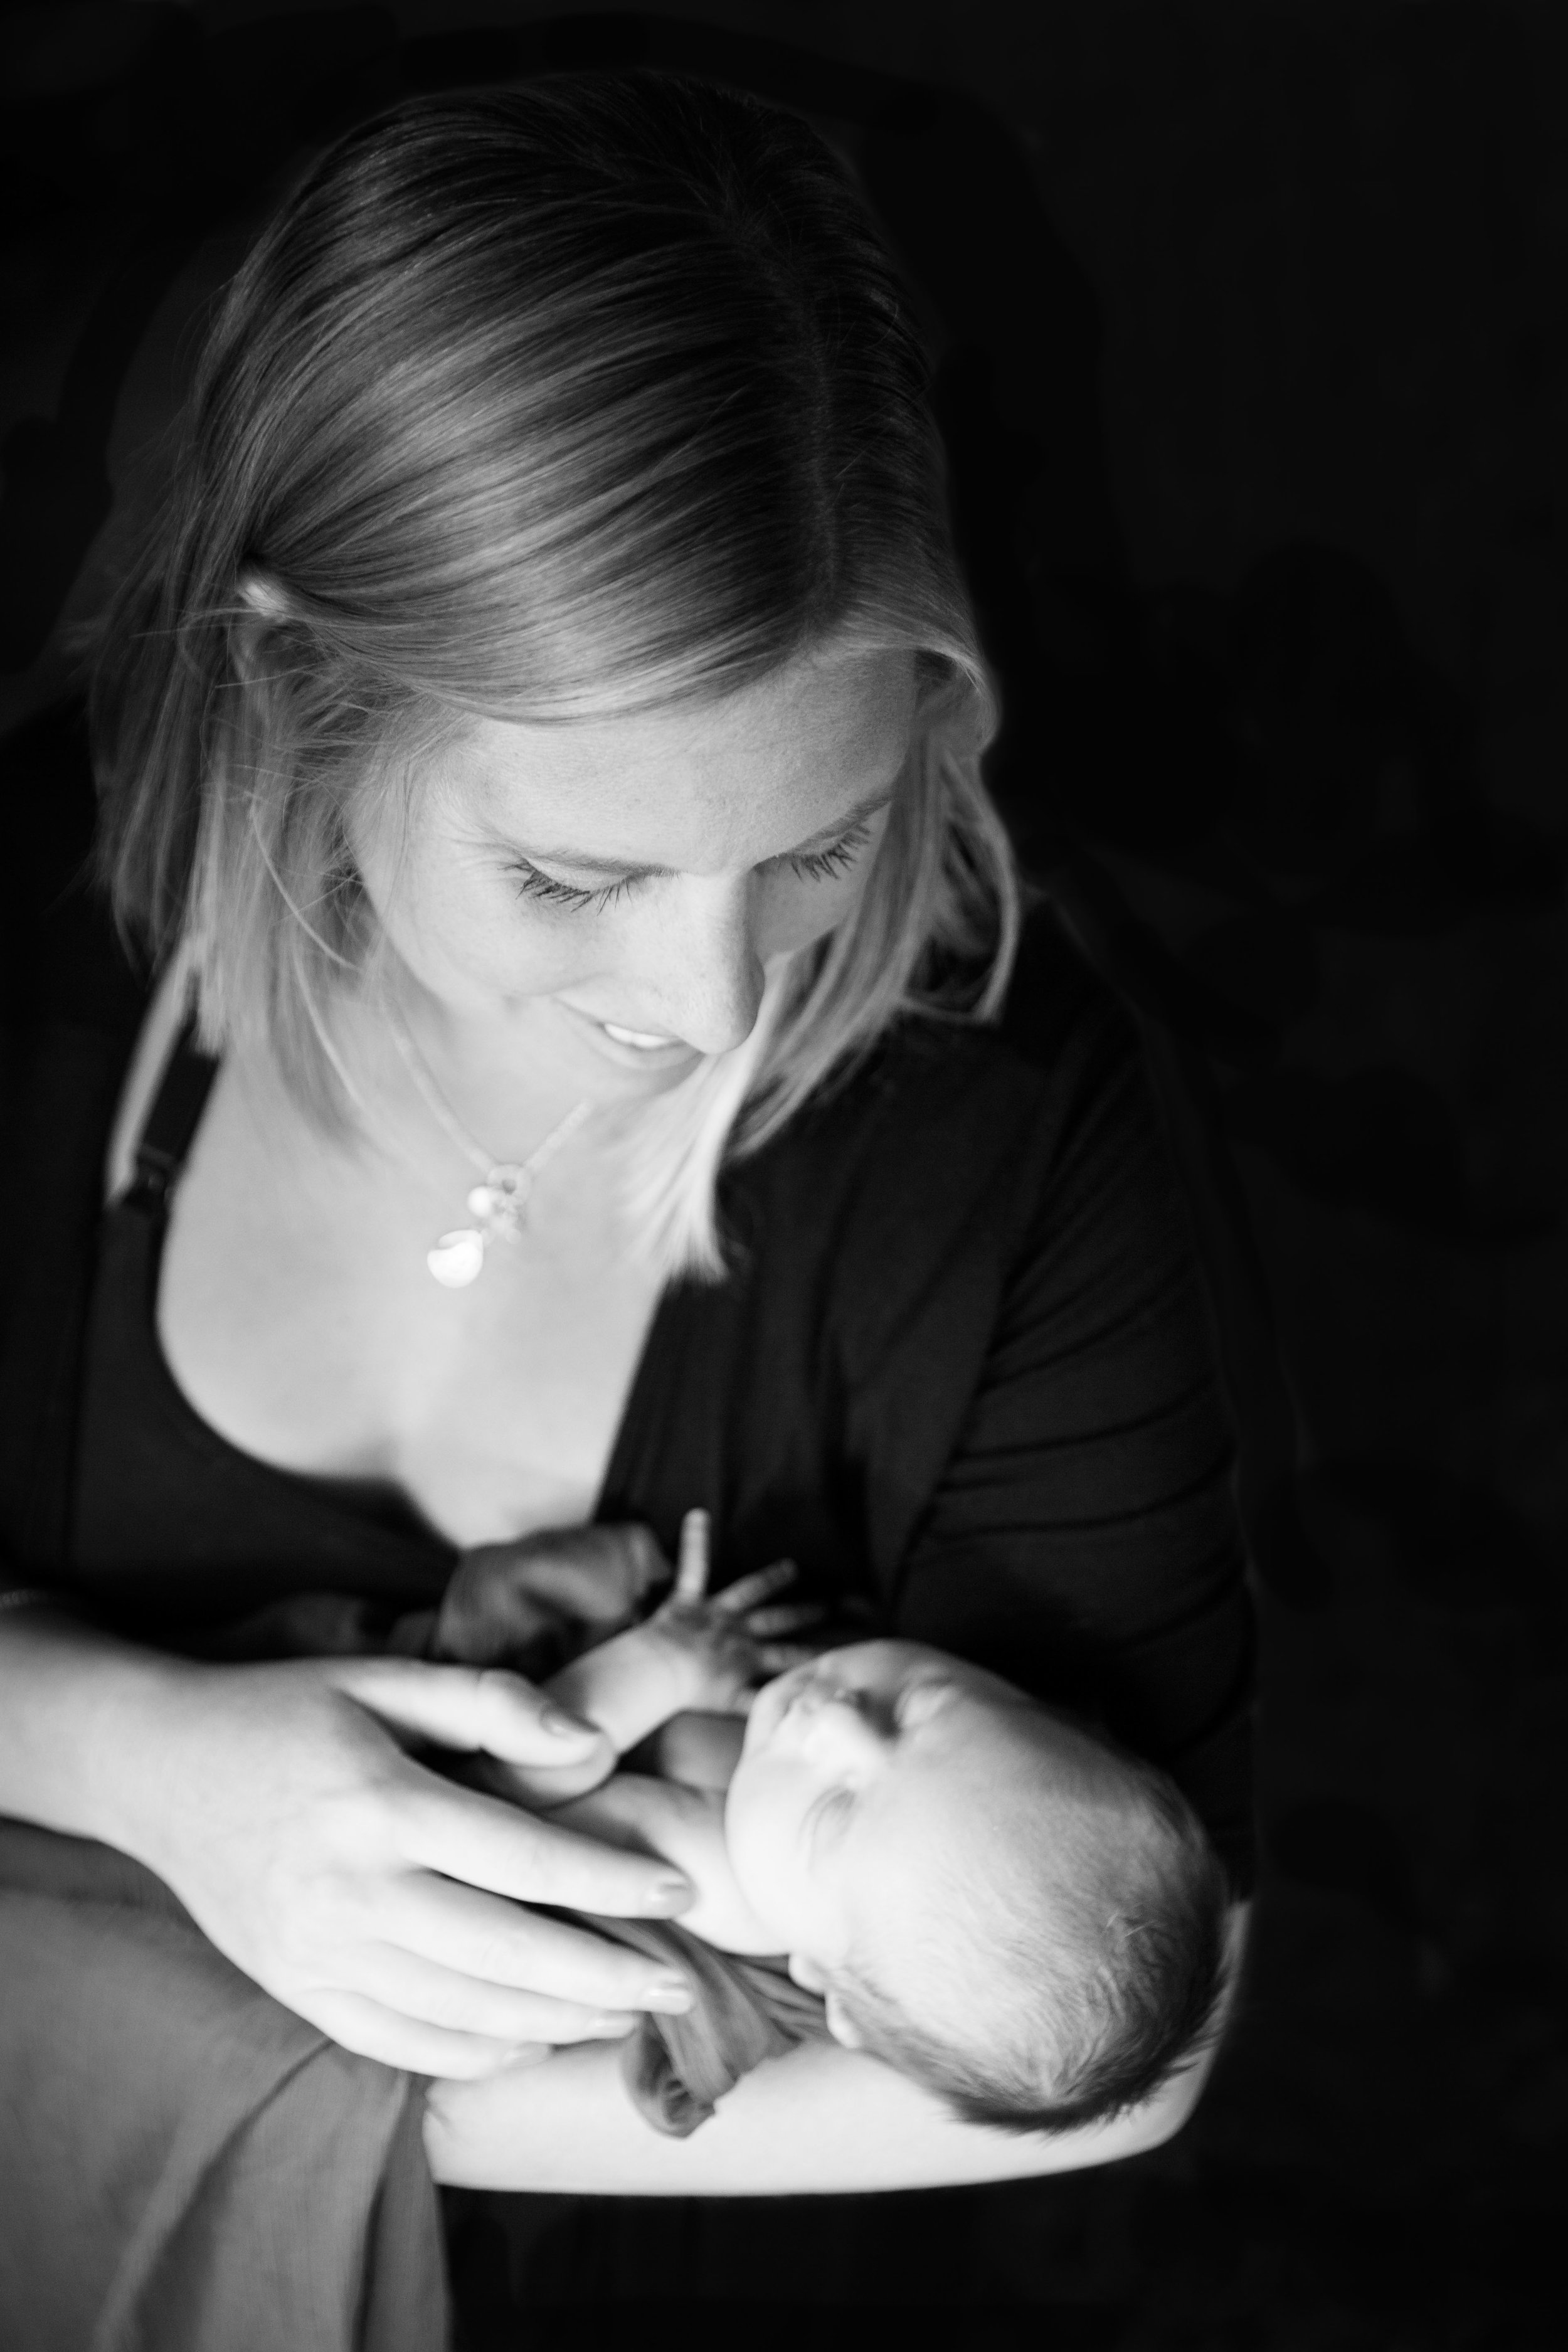 Telluride Family Photography - Newborn